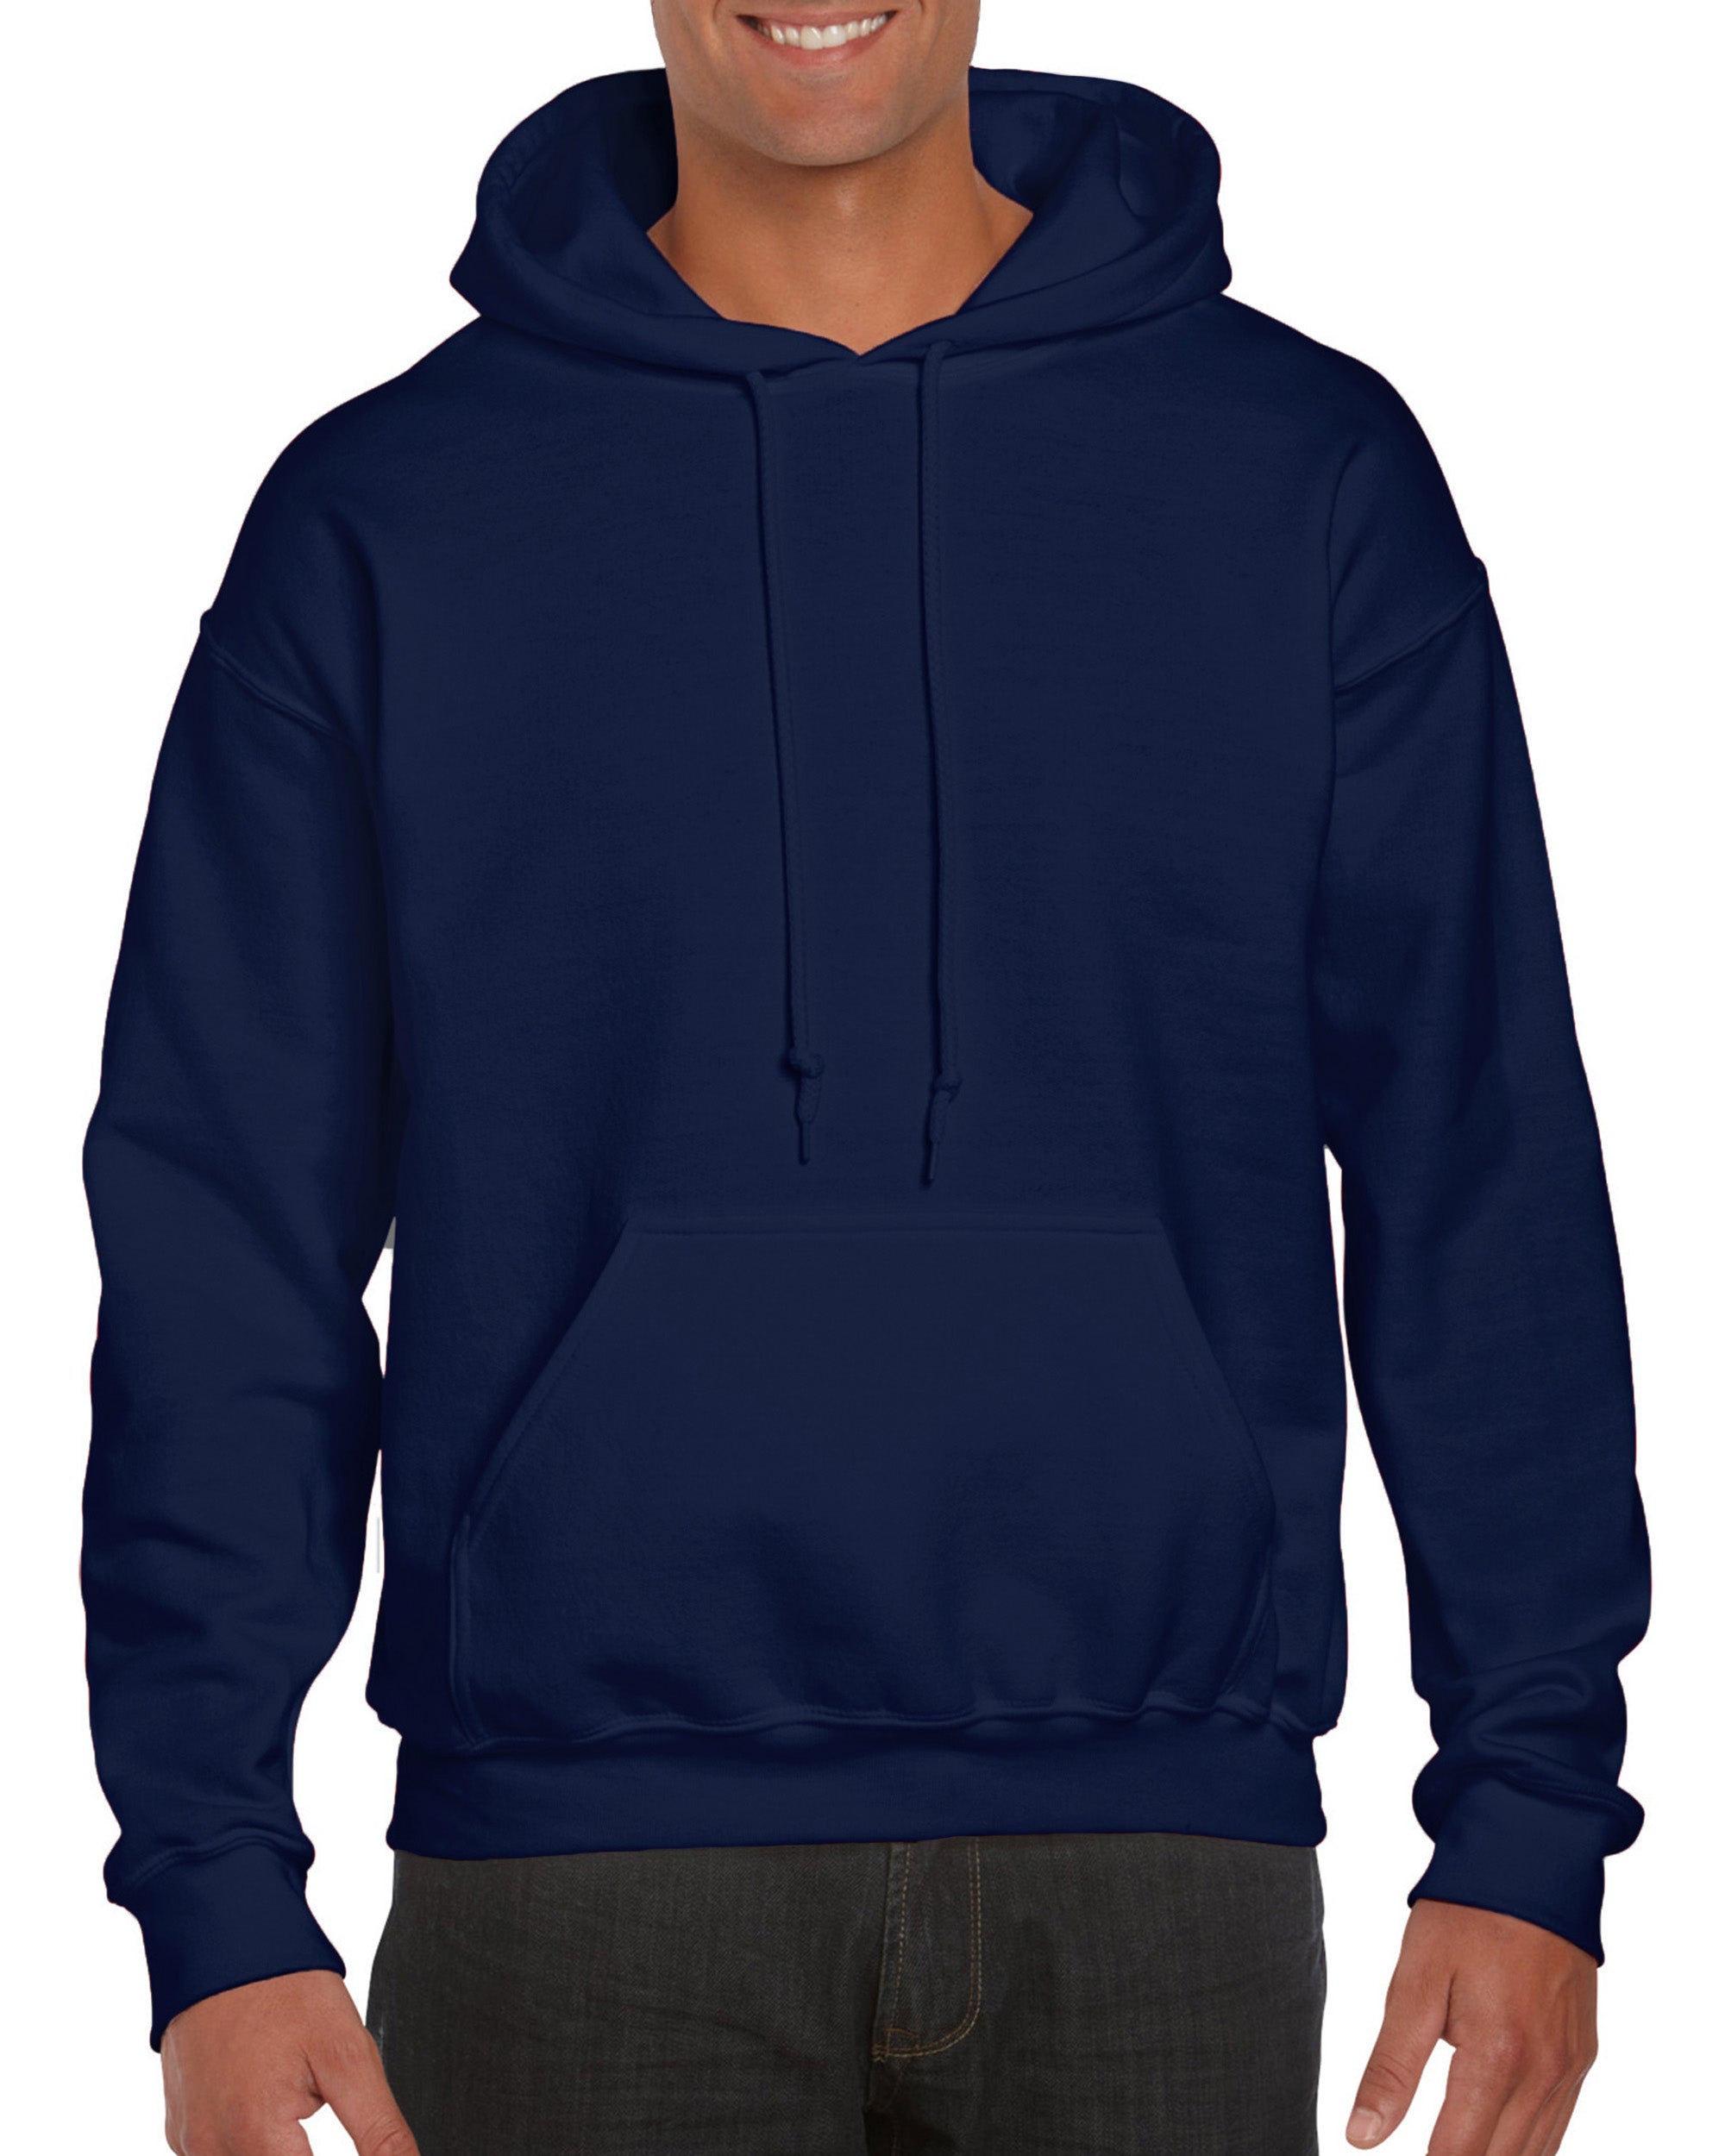 DryBlend Adult Hooded Sweatshirt